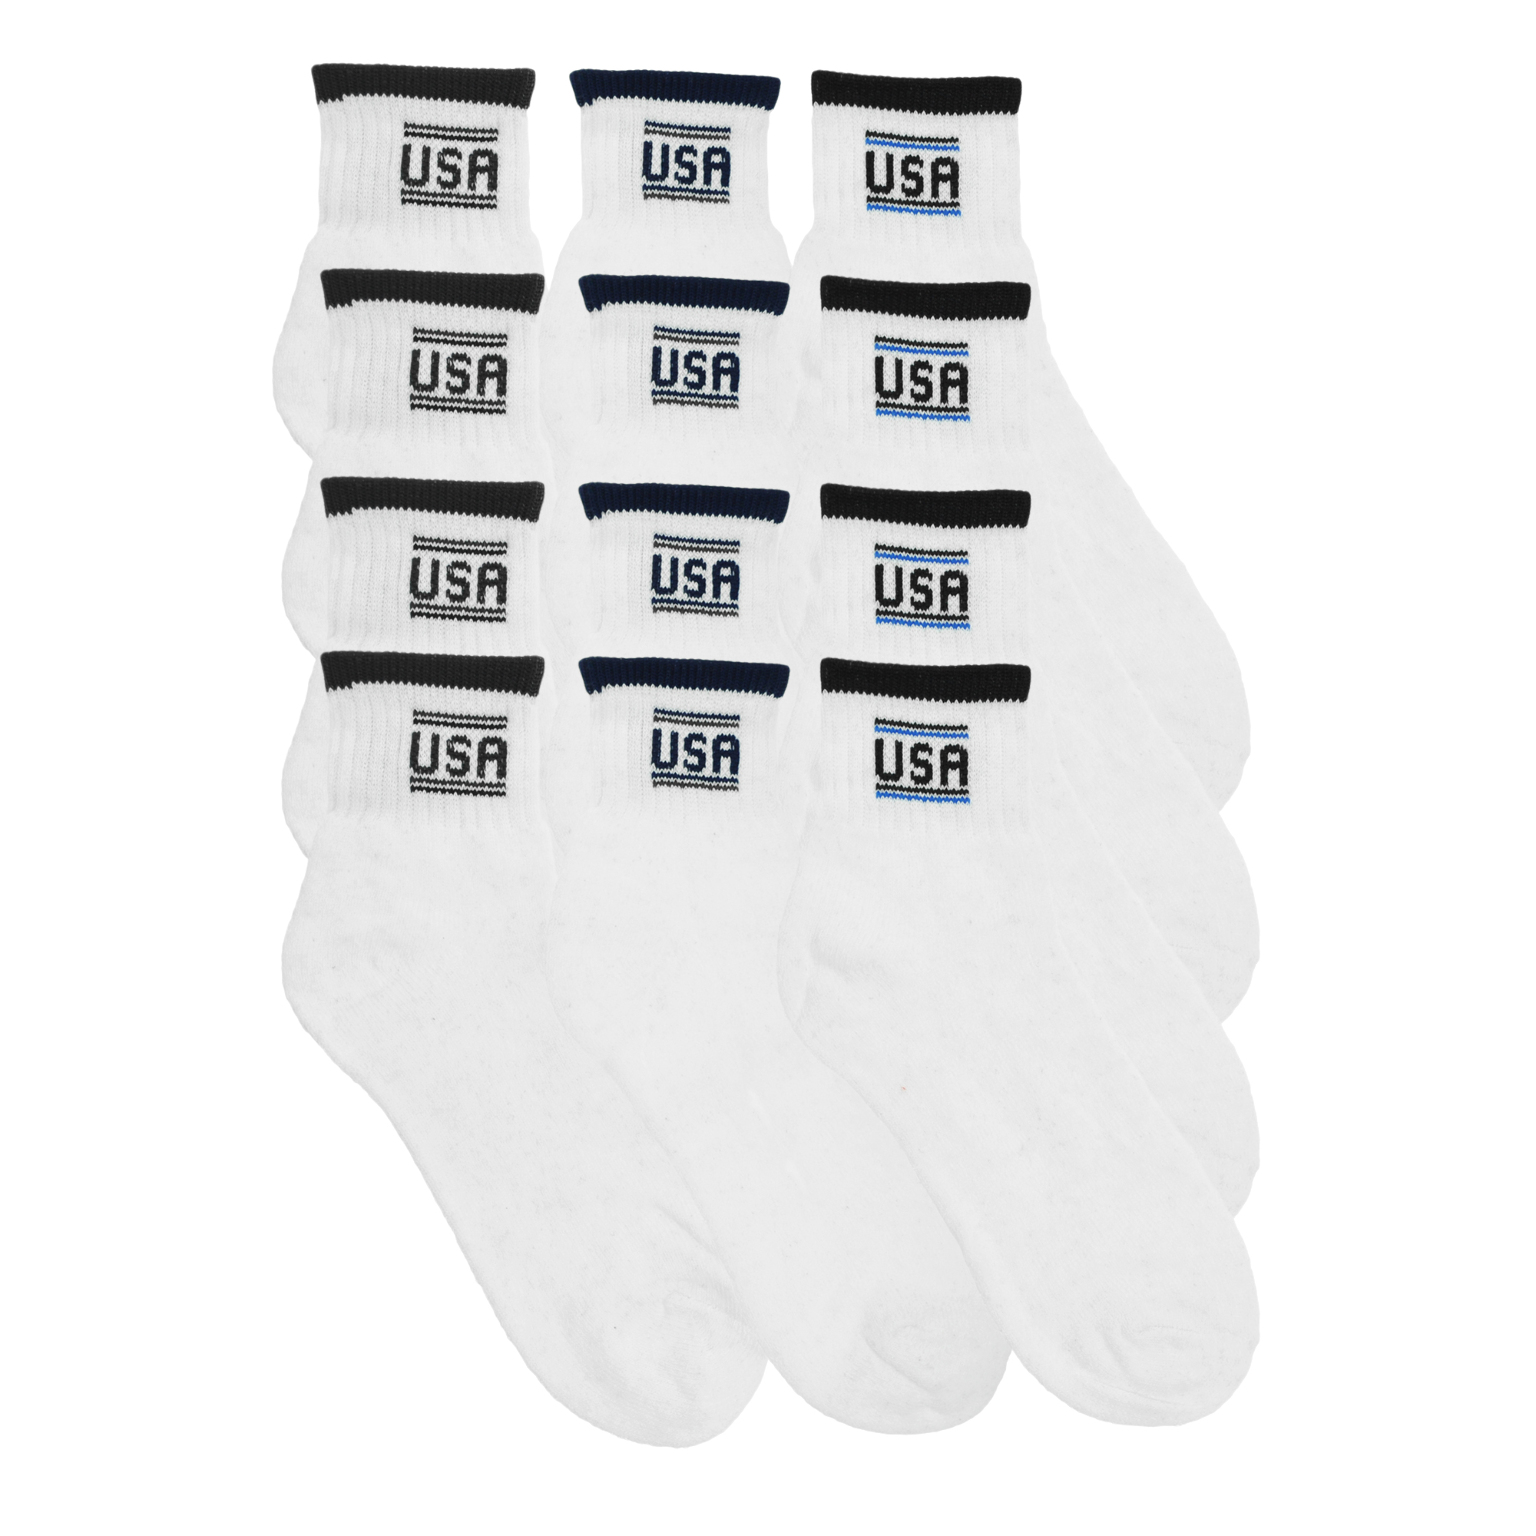 Unisex Cotton Blend USA Ankle Socks - Size S / M